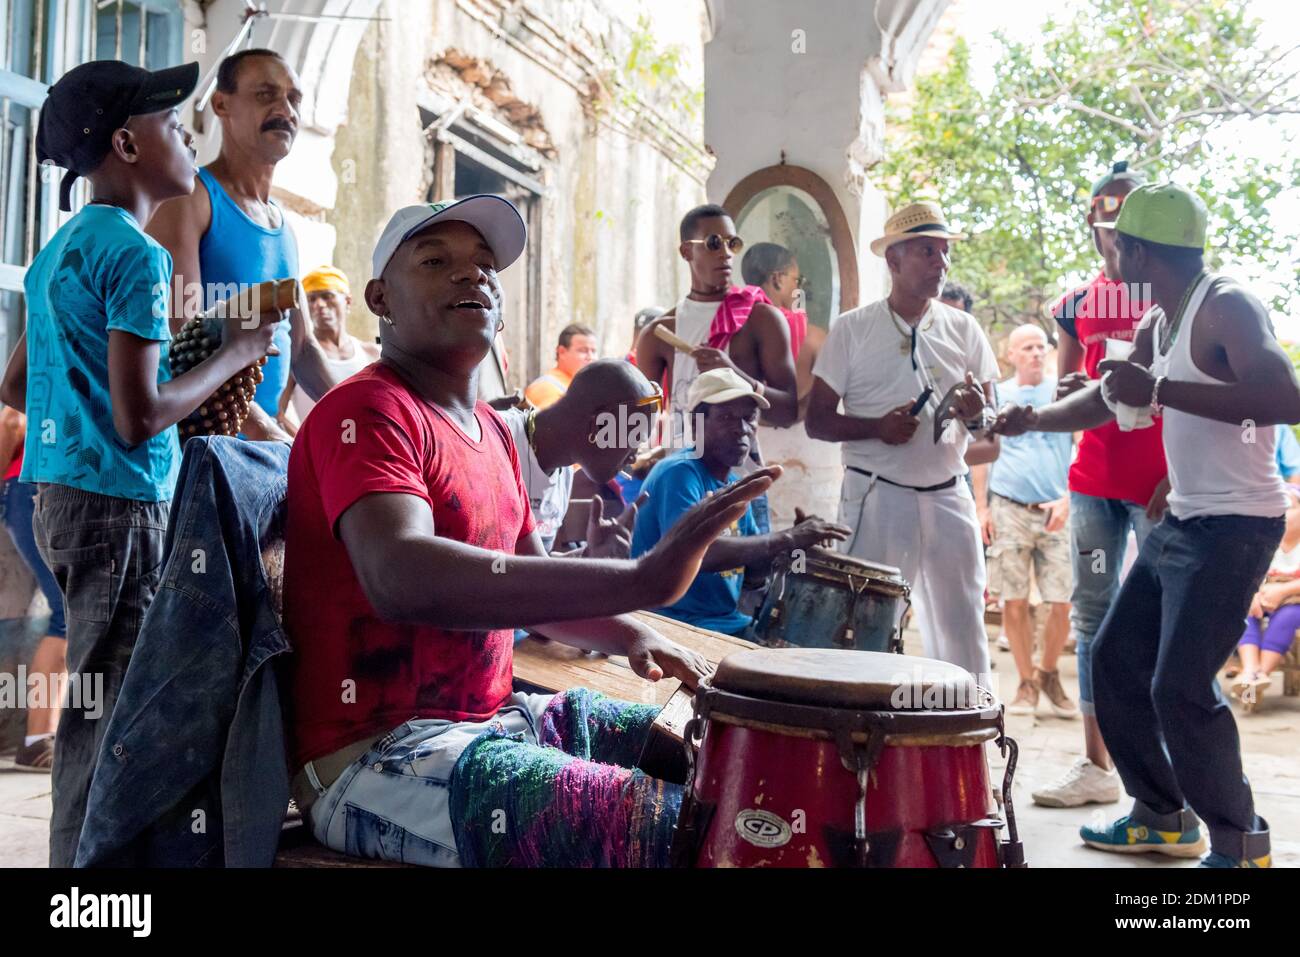 Santeria followers drumming and making music in Trinidad, Cuba Stock Photo